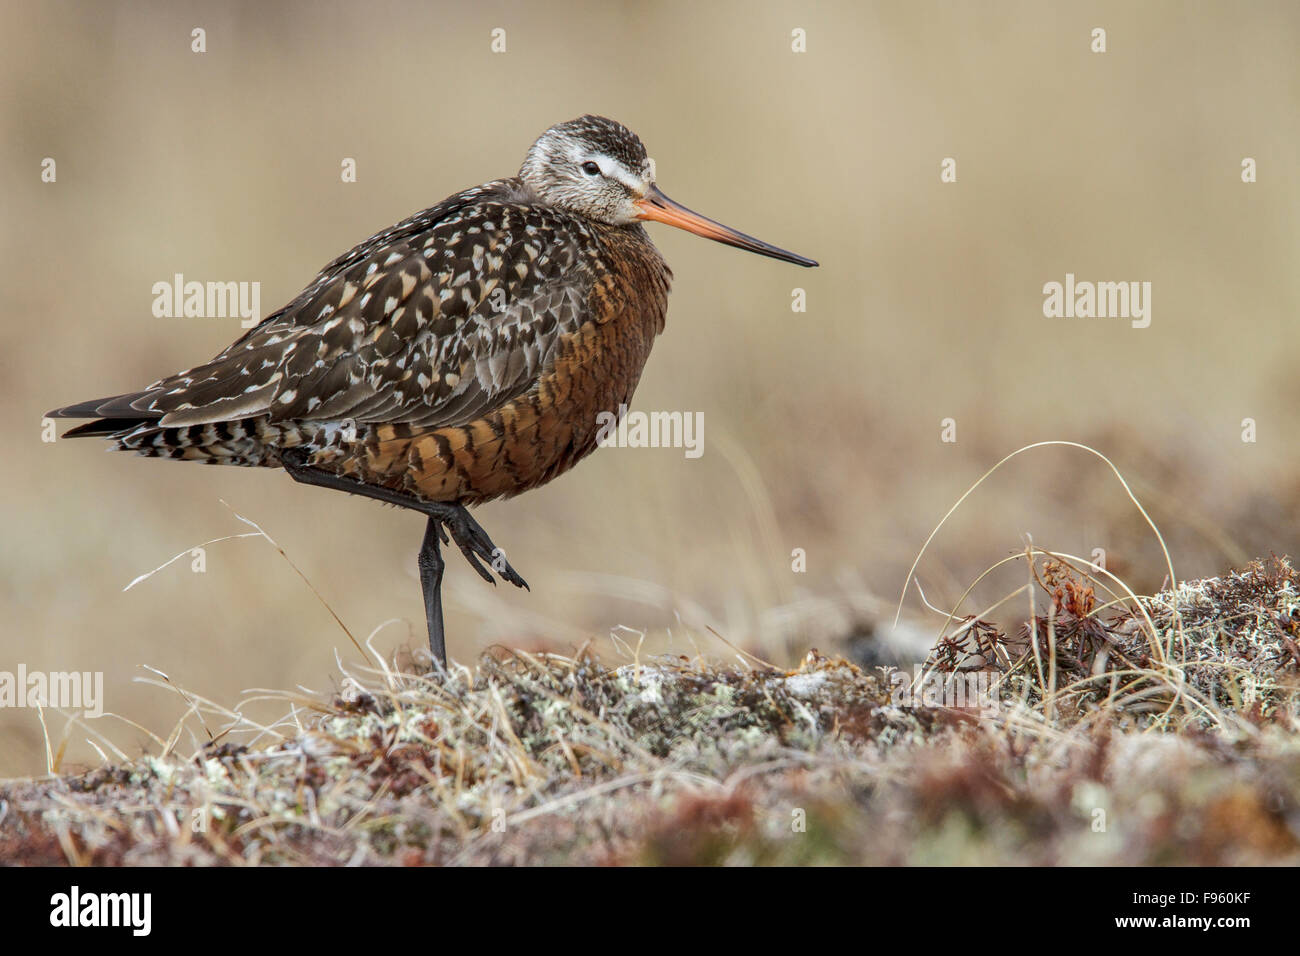 Hudsonian godwit hi-res stock photography and images - Alamy